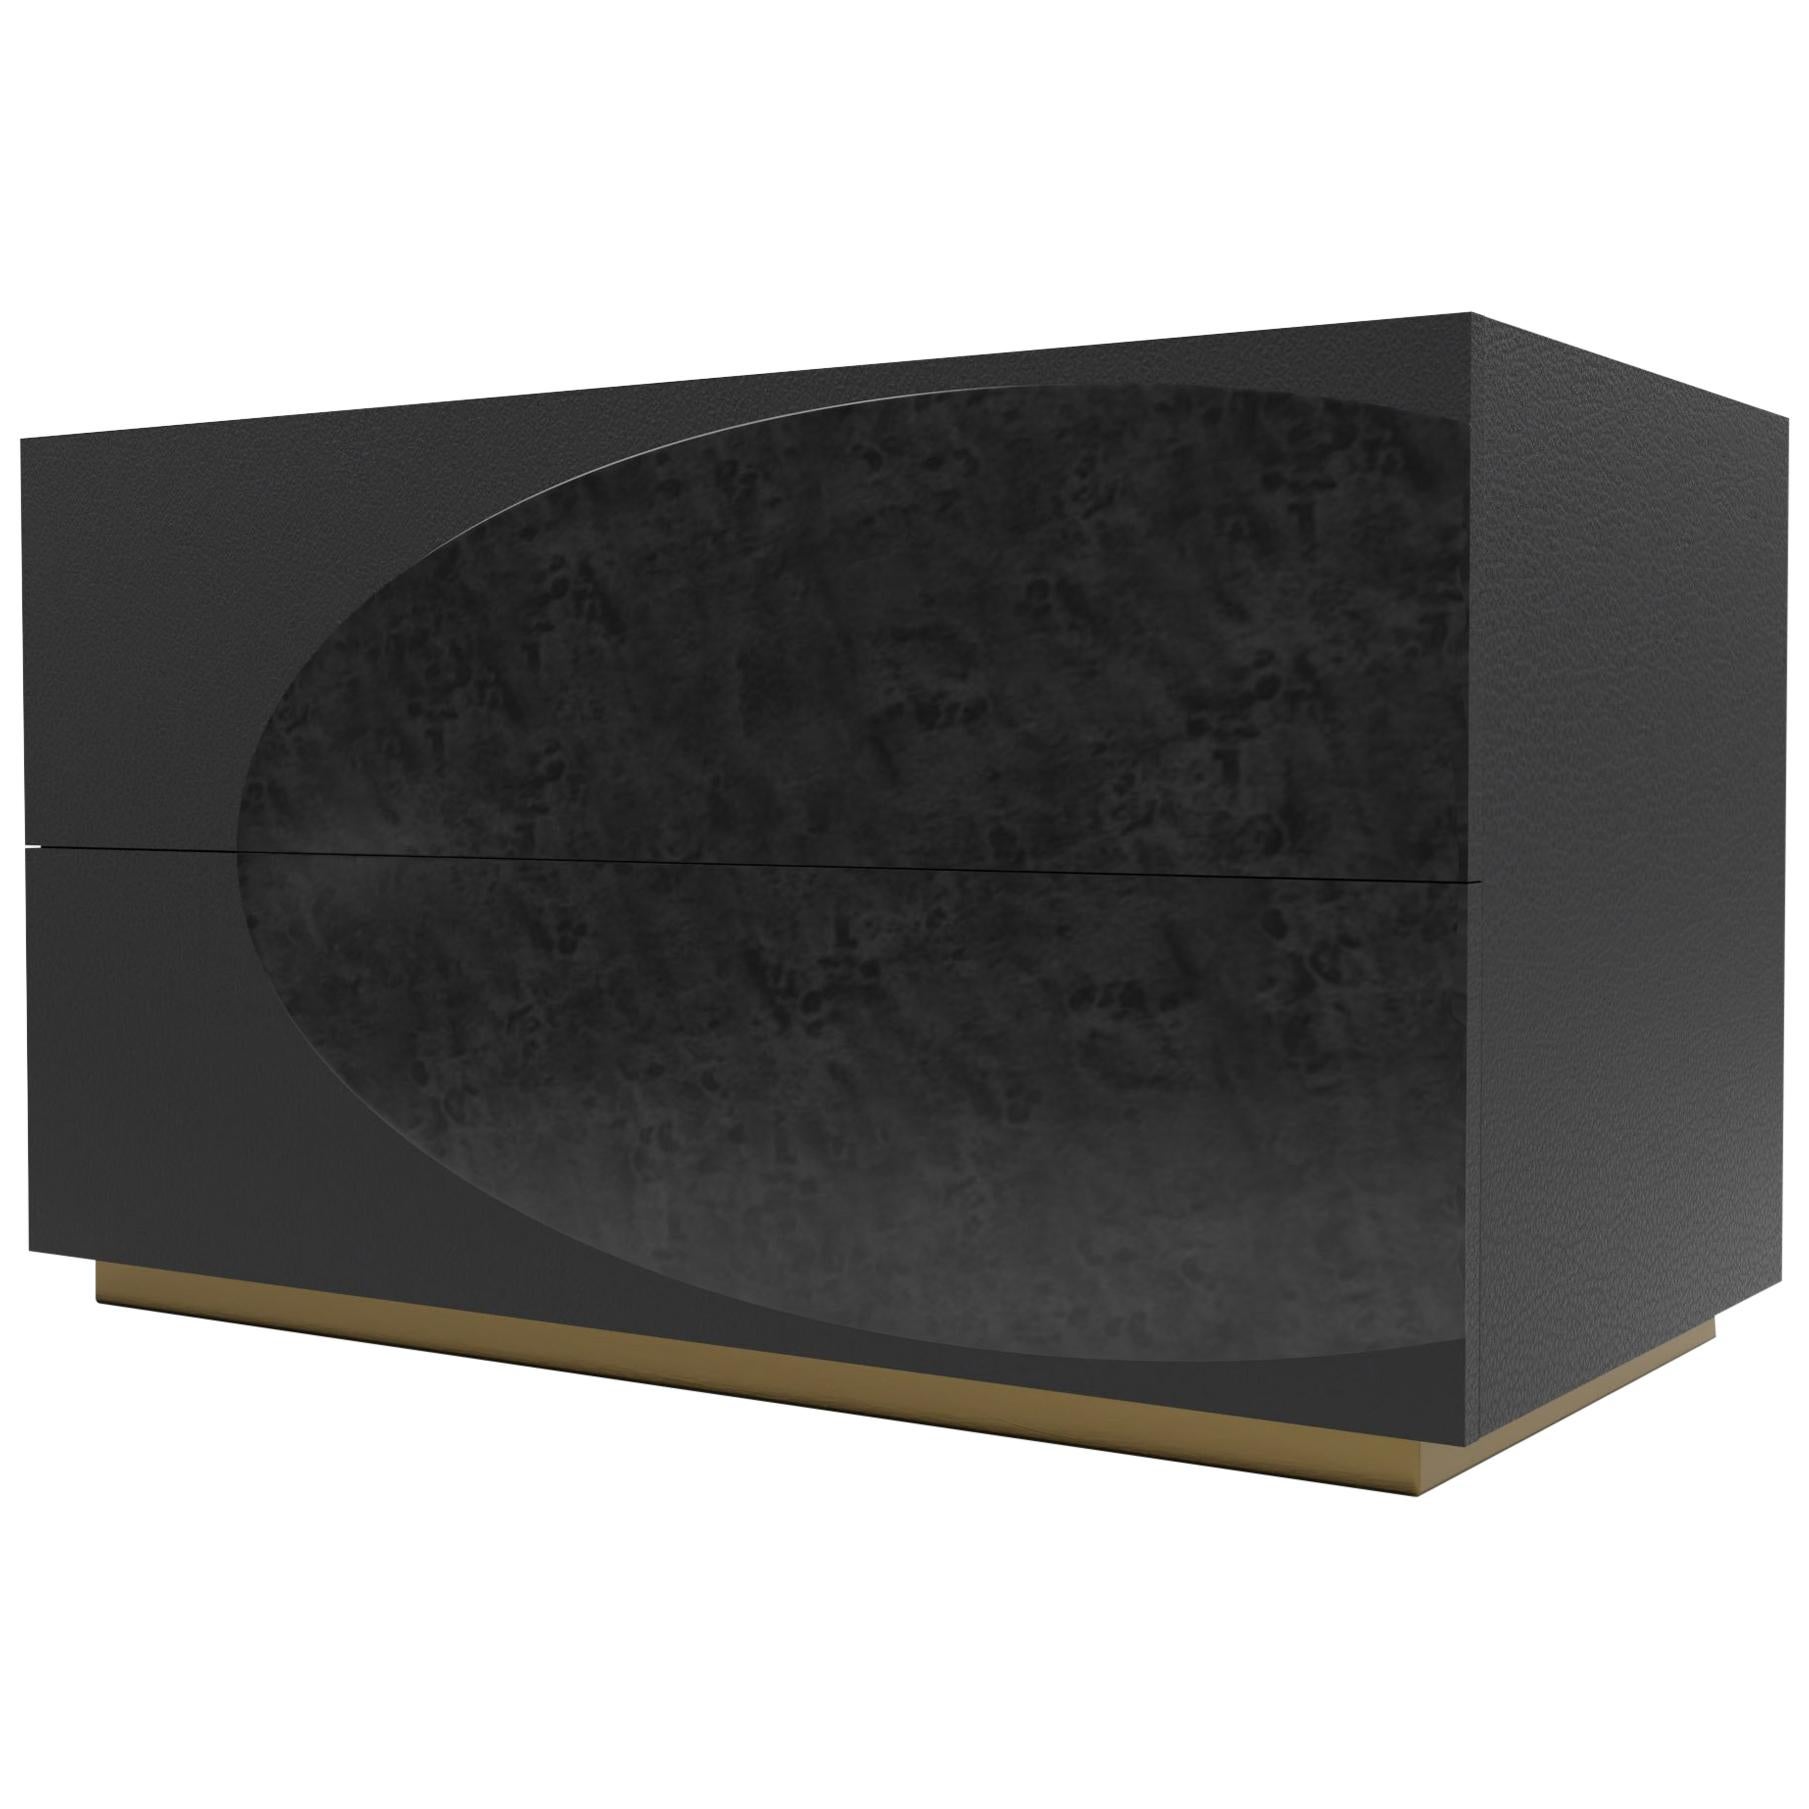 LAGUNA NIGHTSTAND - Modern Design in Black Lacquer with a Dark Bronze Base